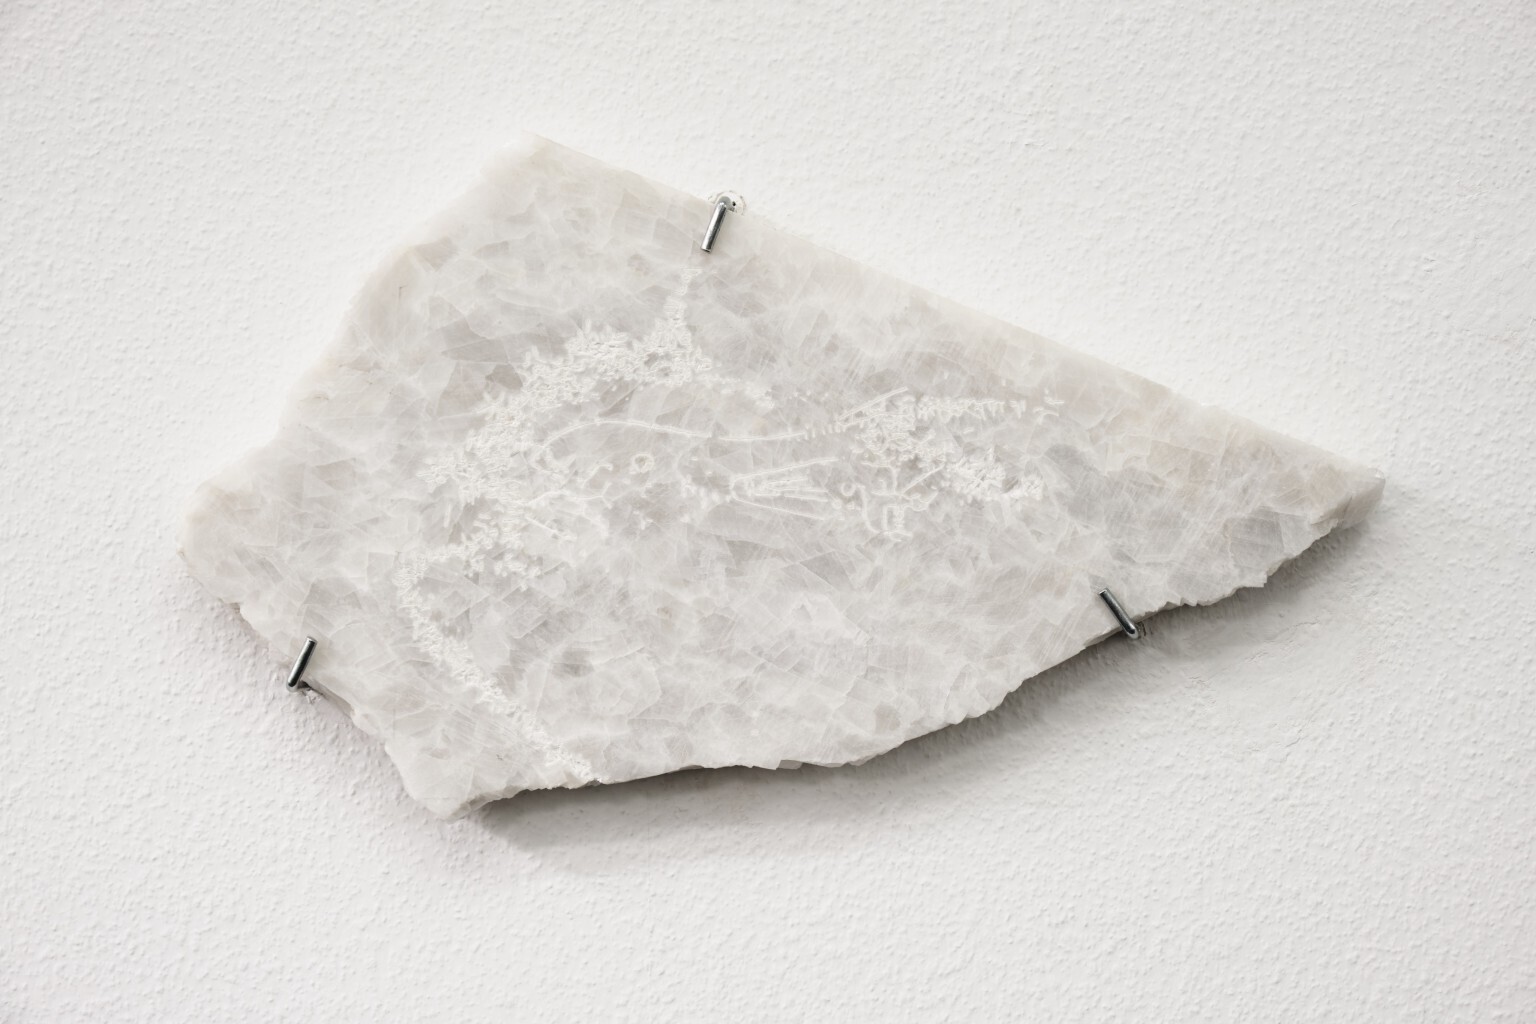 Jacopo Mazzetti, Children, laser etched quartz crystals, ca. 40 x 25 x 2 cm, 2012